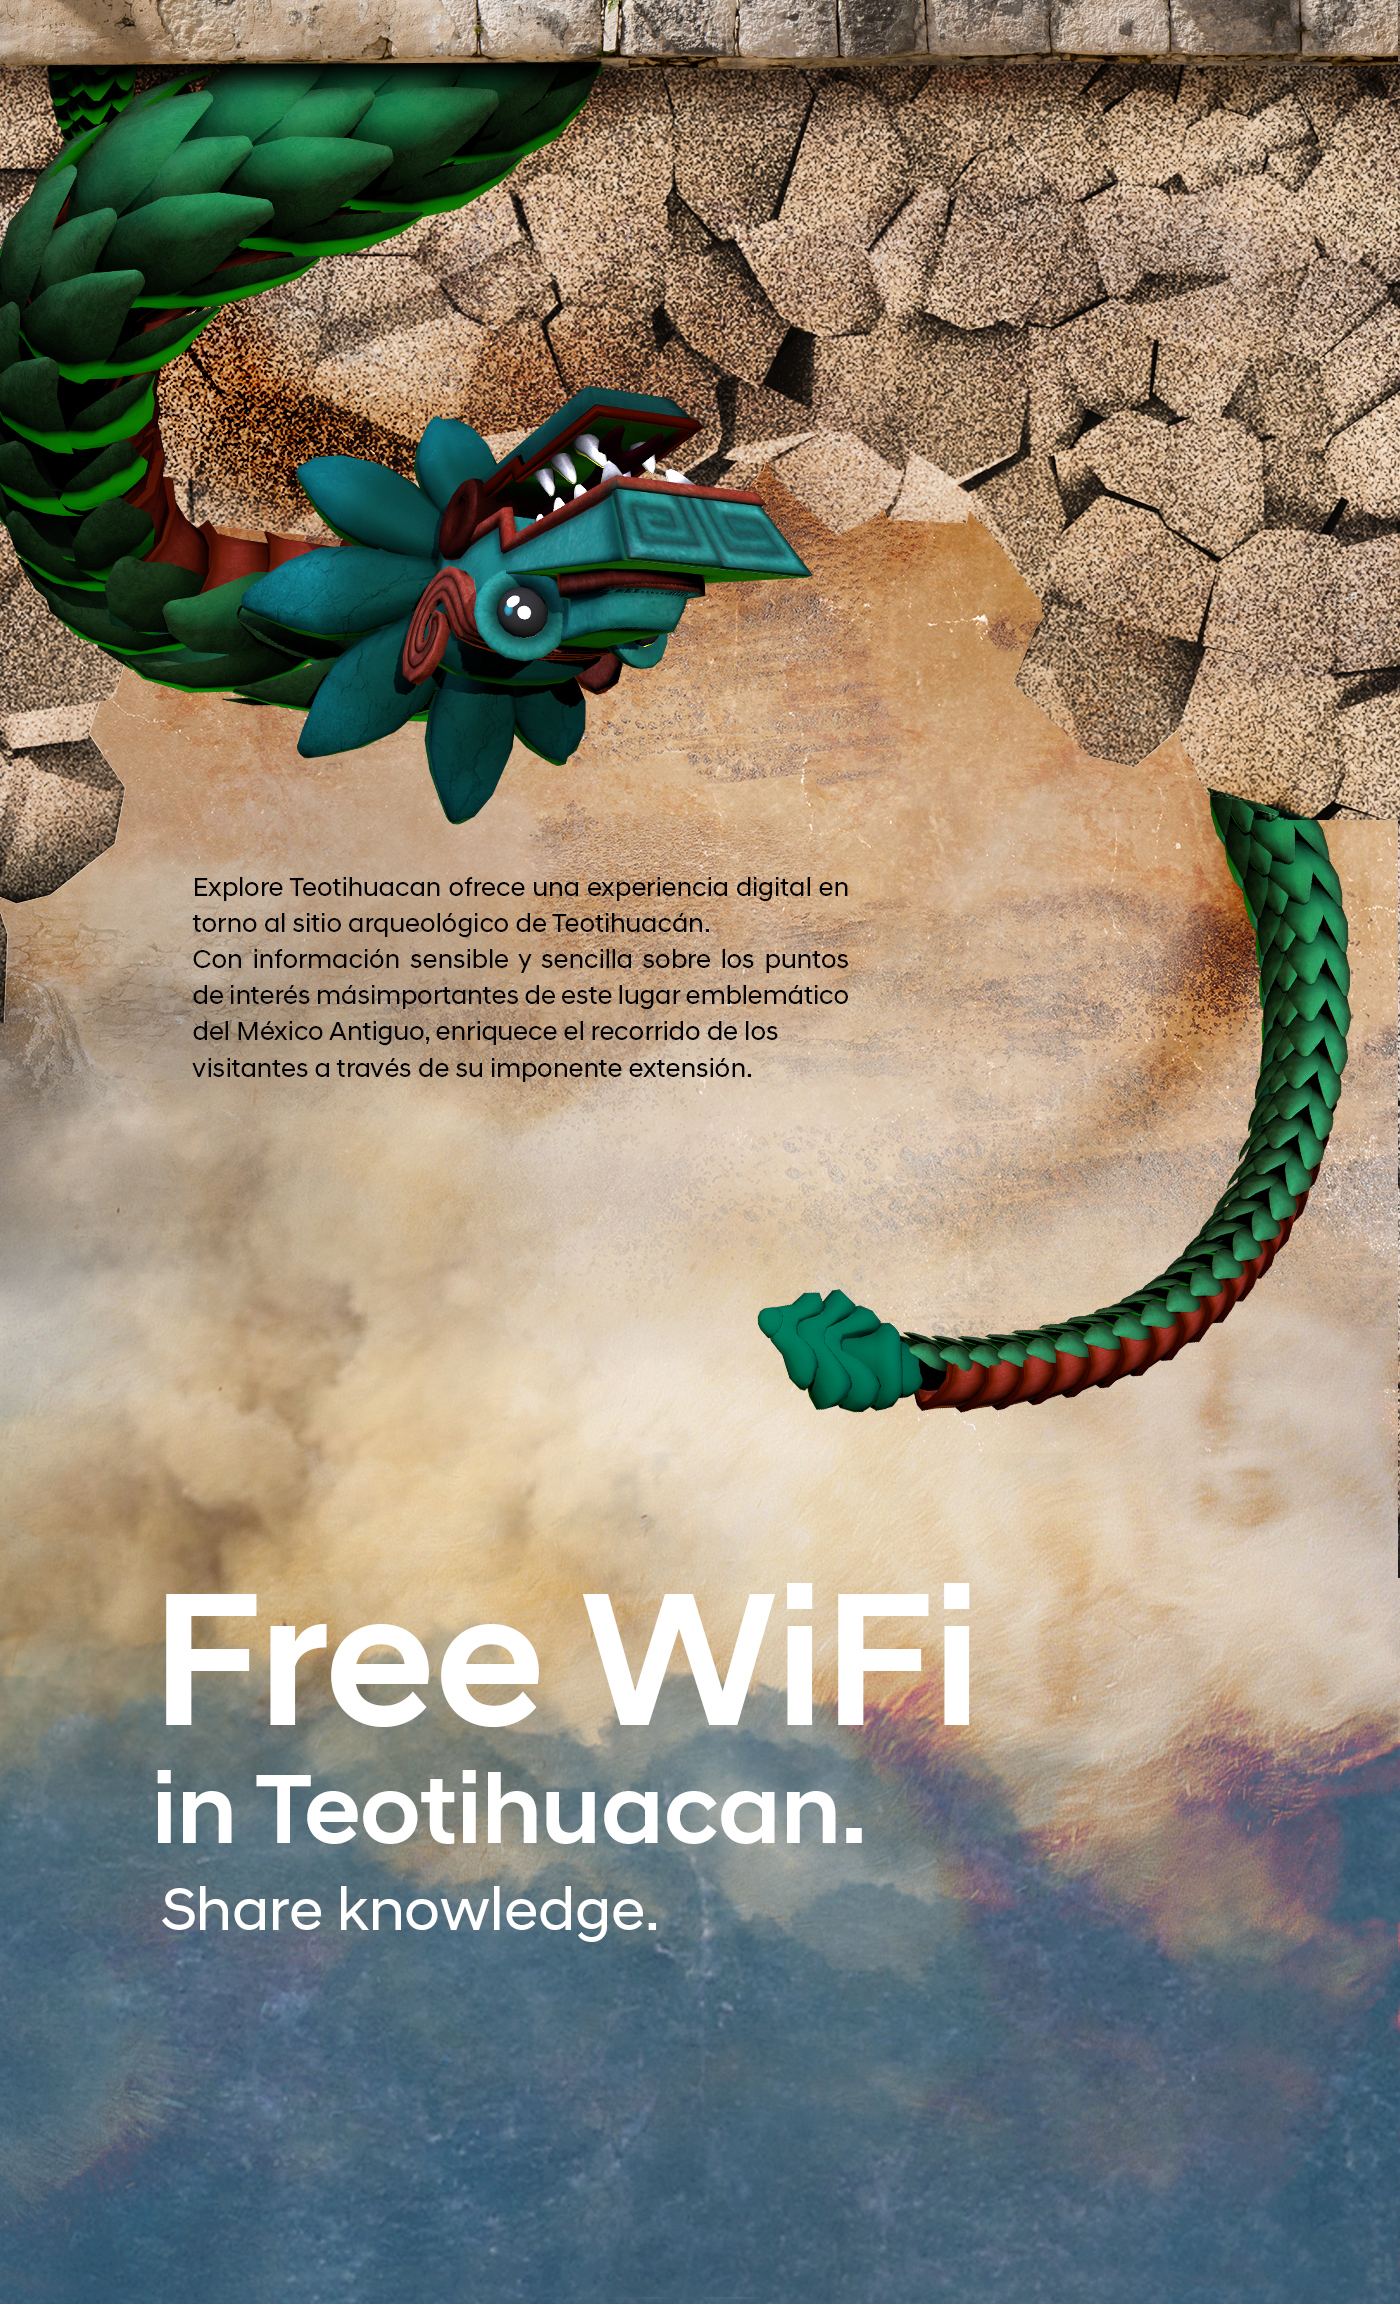 teotihuacan mexico Hyundai share knowledge Legacy history quetzalcoatl app digital